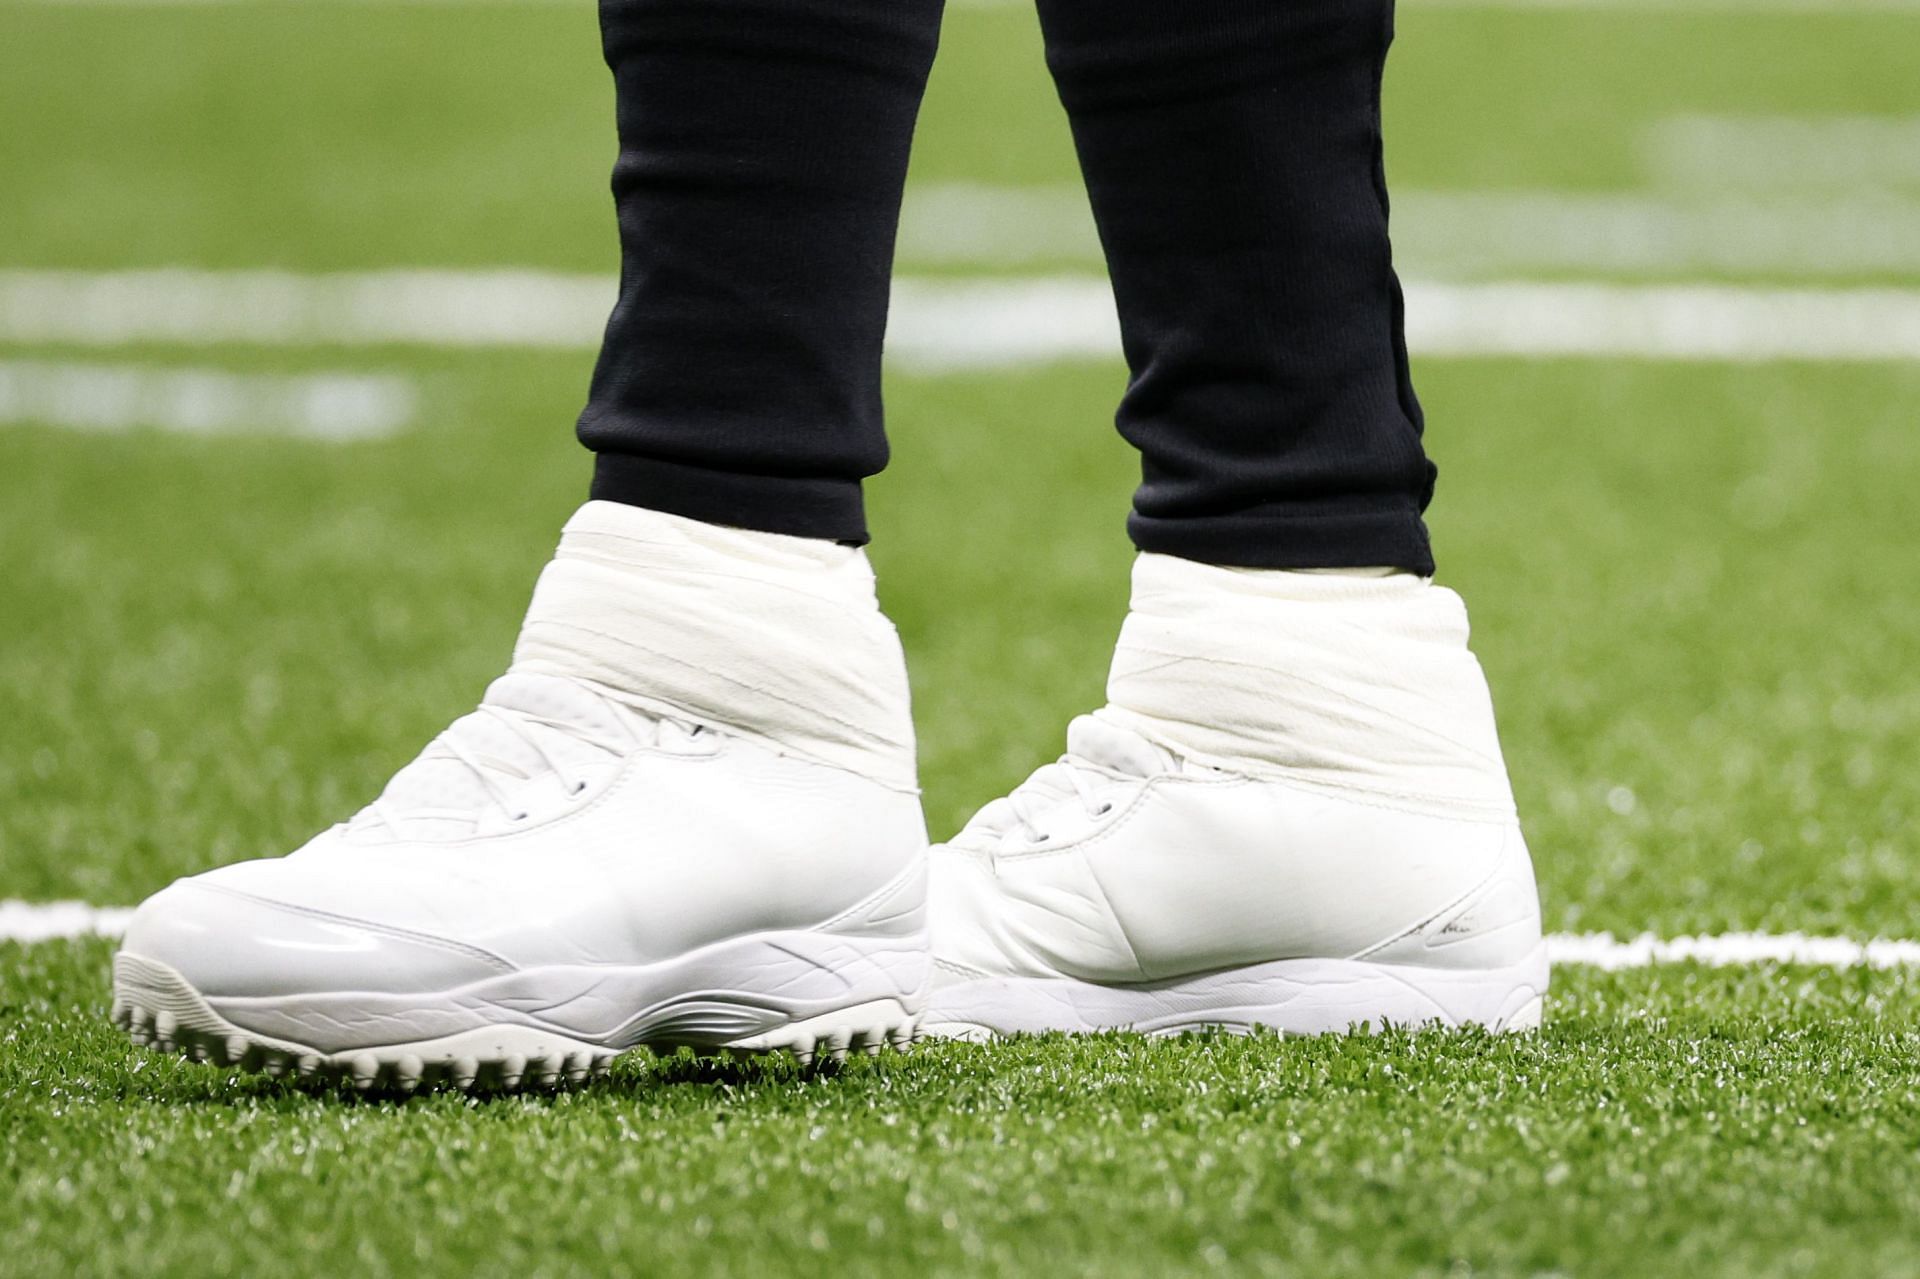 Why are Tom Brady's shoes blank? True reason behind Buccaneers